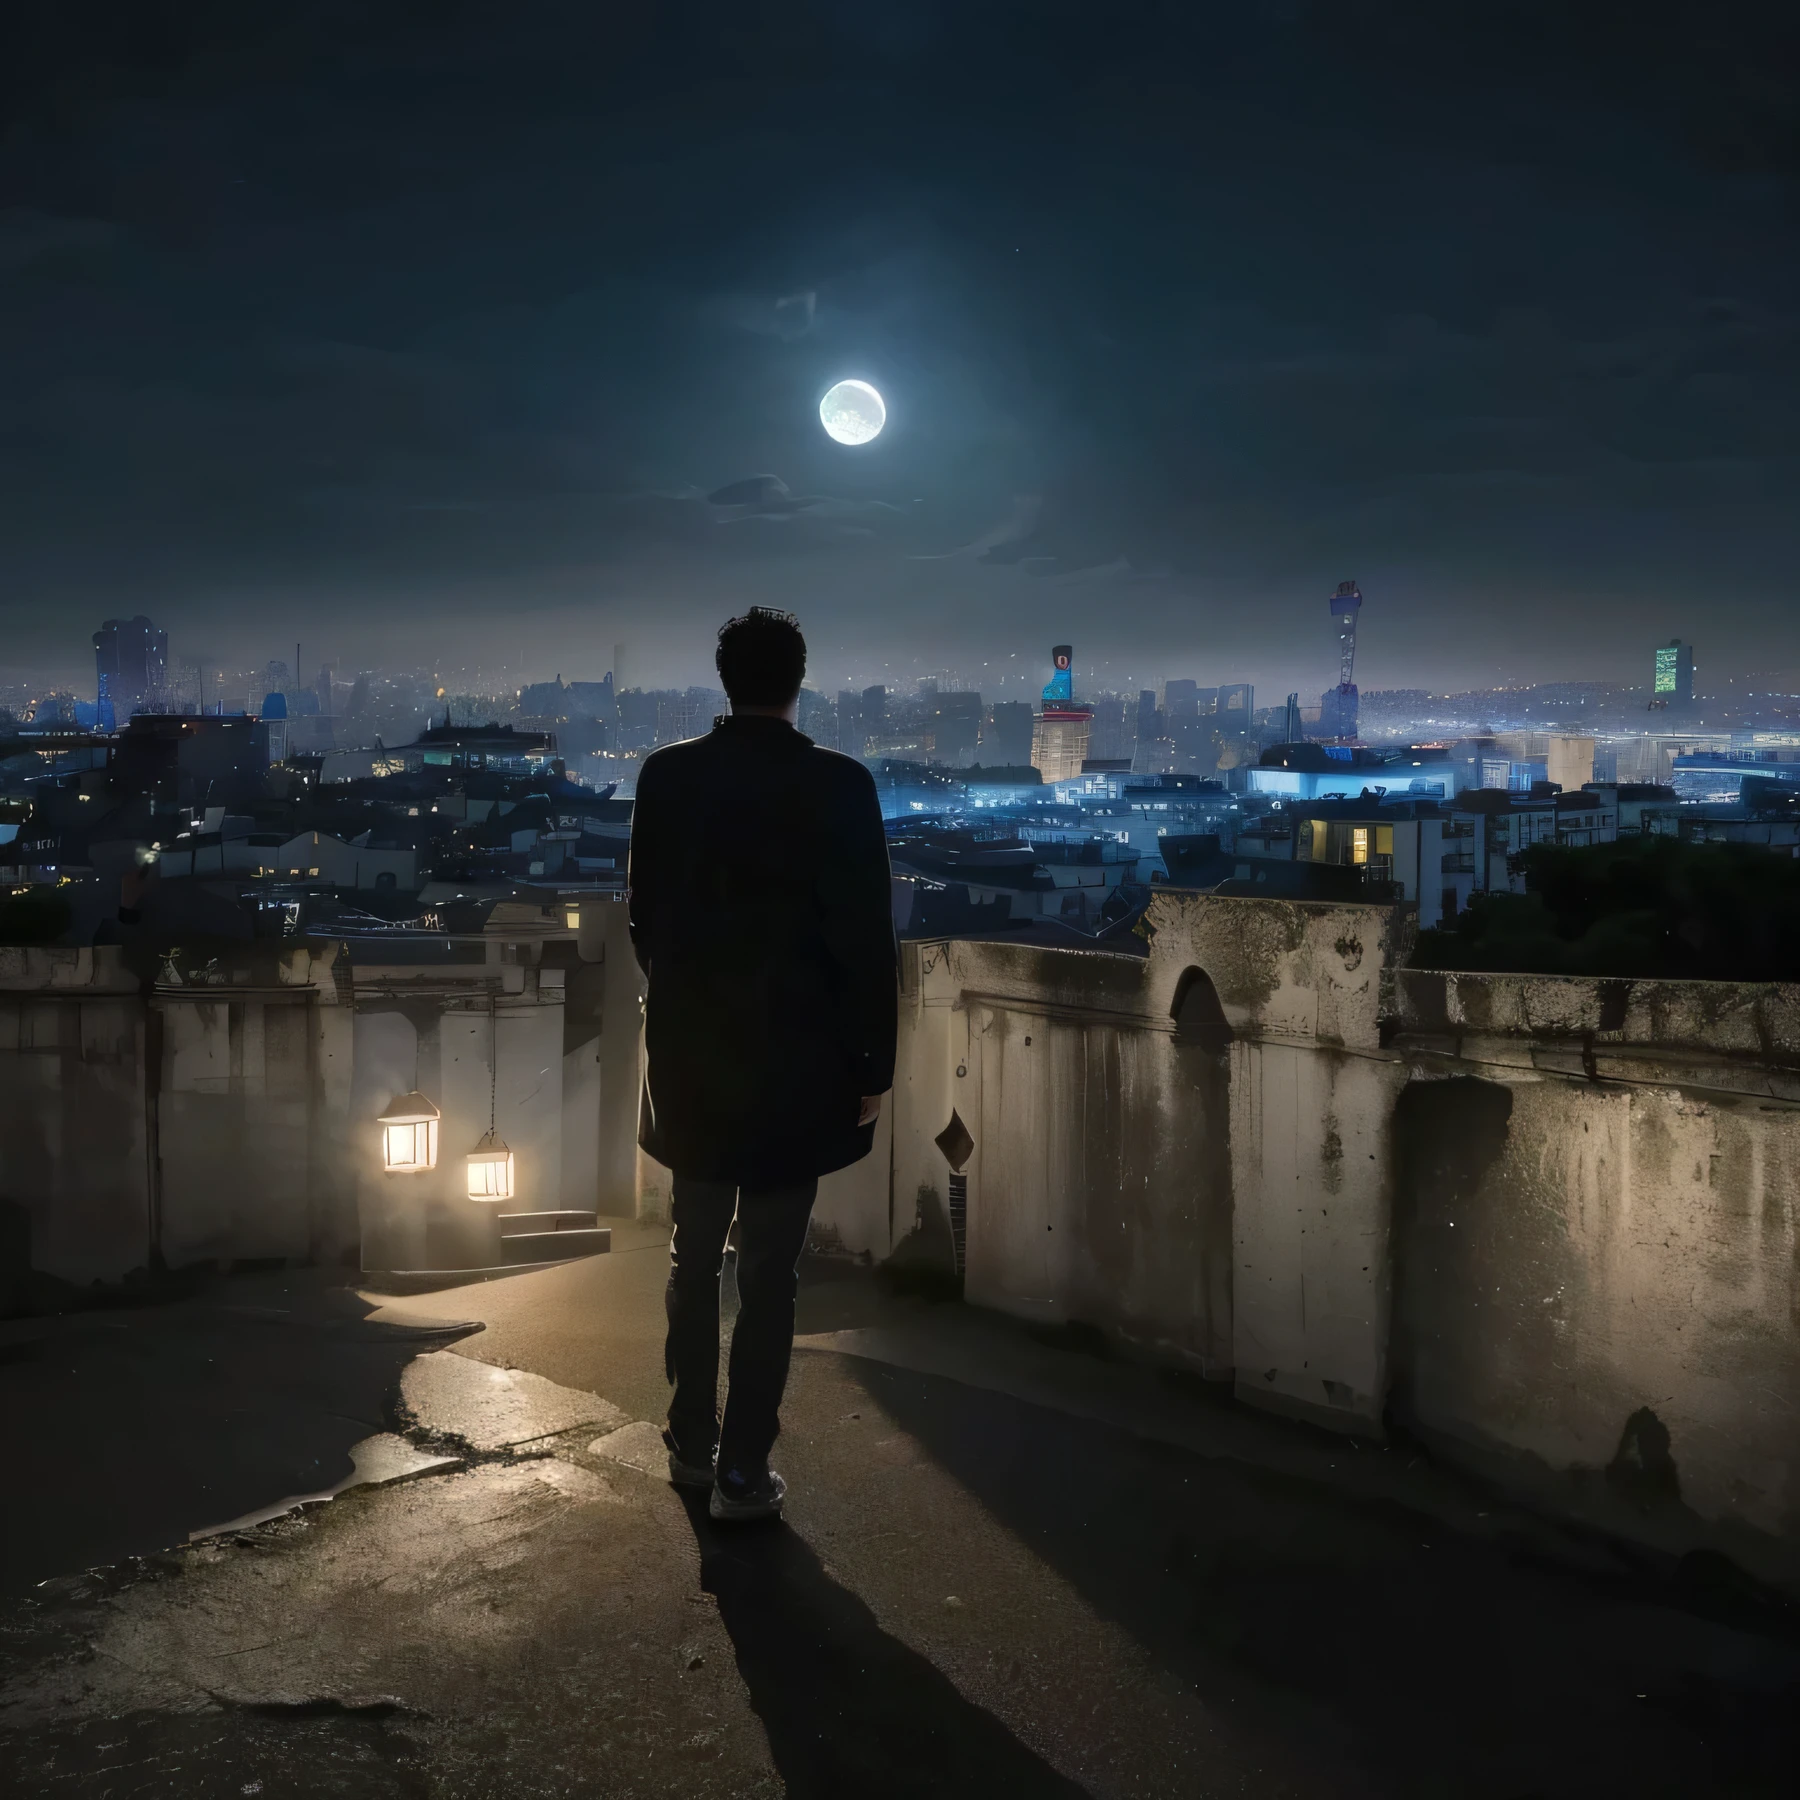 arafed man standing on a ledge 看着城市 at night, 看着满月, 看着月亮, 月亮在他身后, 看着城市, 月亮照在男人身上, 俯瞰城市, 满月的夜晚, 俯瞰现代化城市, 走向满月, 月亮很大，在城市里. 在中国城市的场景中 